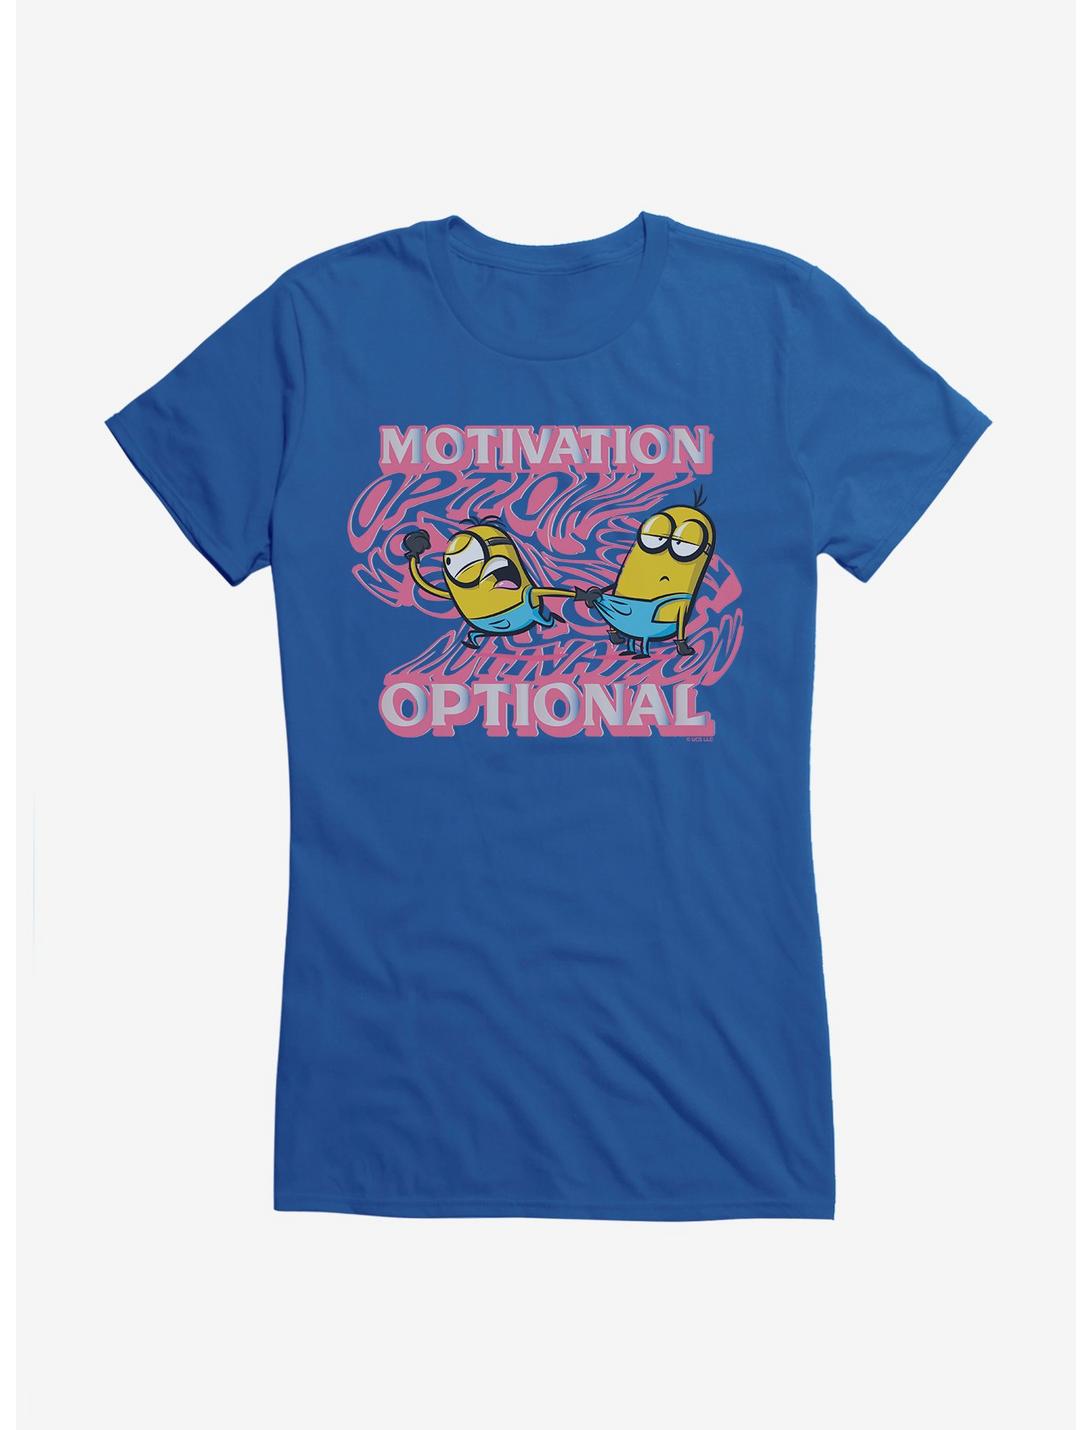 Minions Groovy Motivation Optional Girls T-Shirt, ROYAL, hi-res